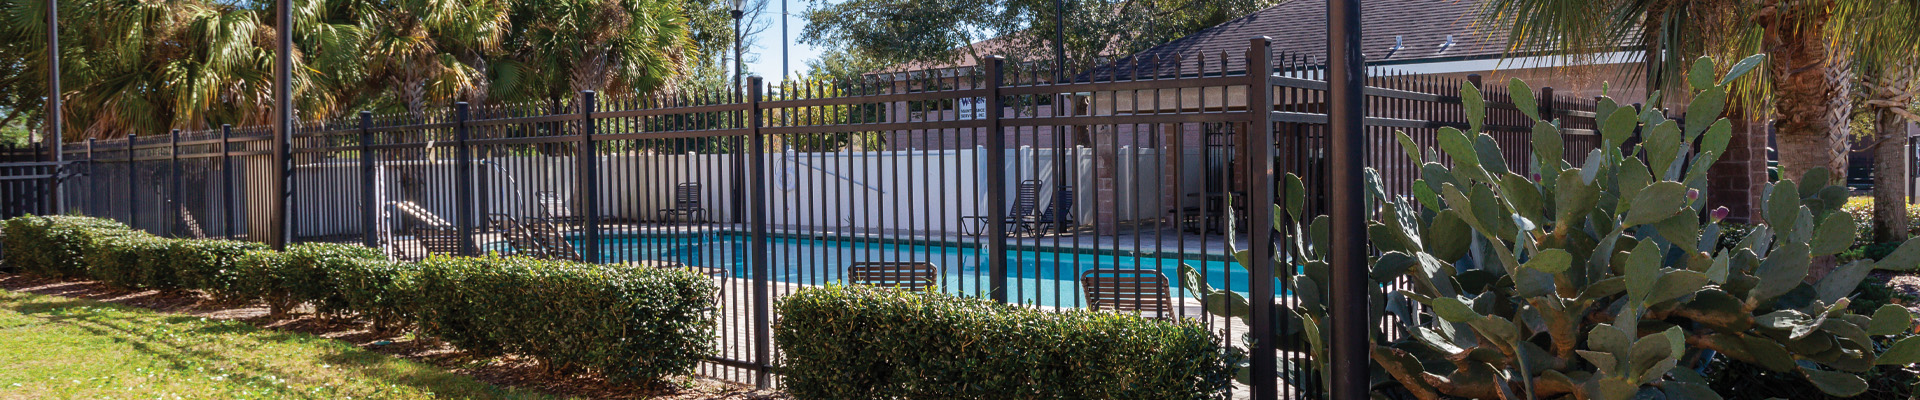 pool fence installation south florida